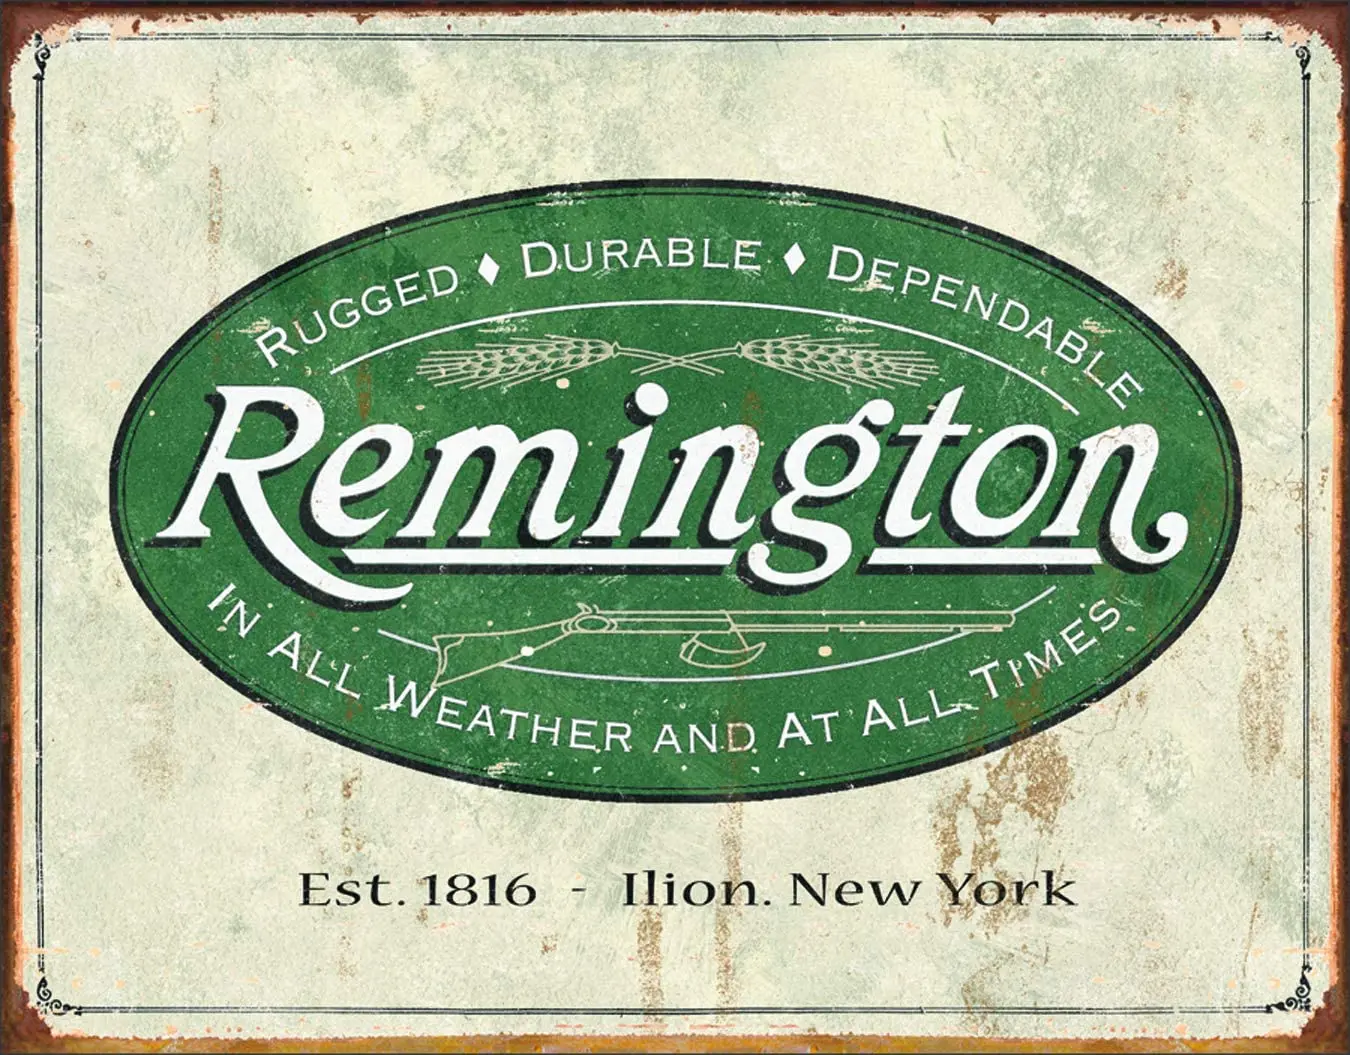 Remington Brand Shotguns Guns Shells Duck Hunting Advertising Tin Metal Sign 